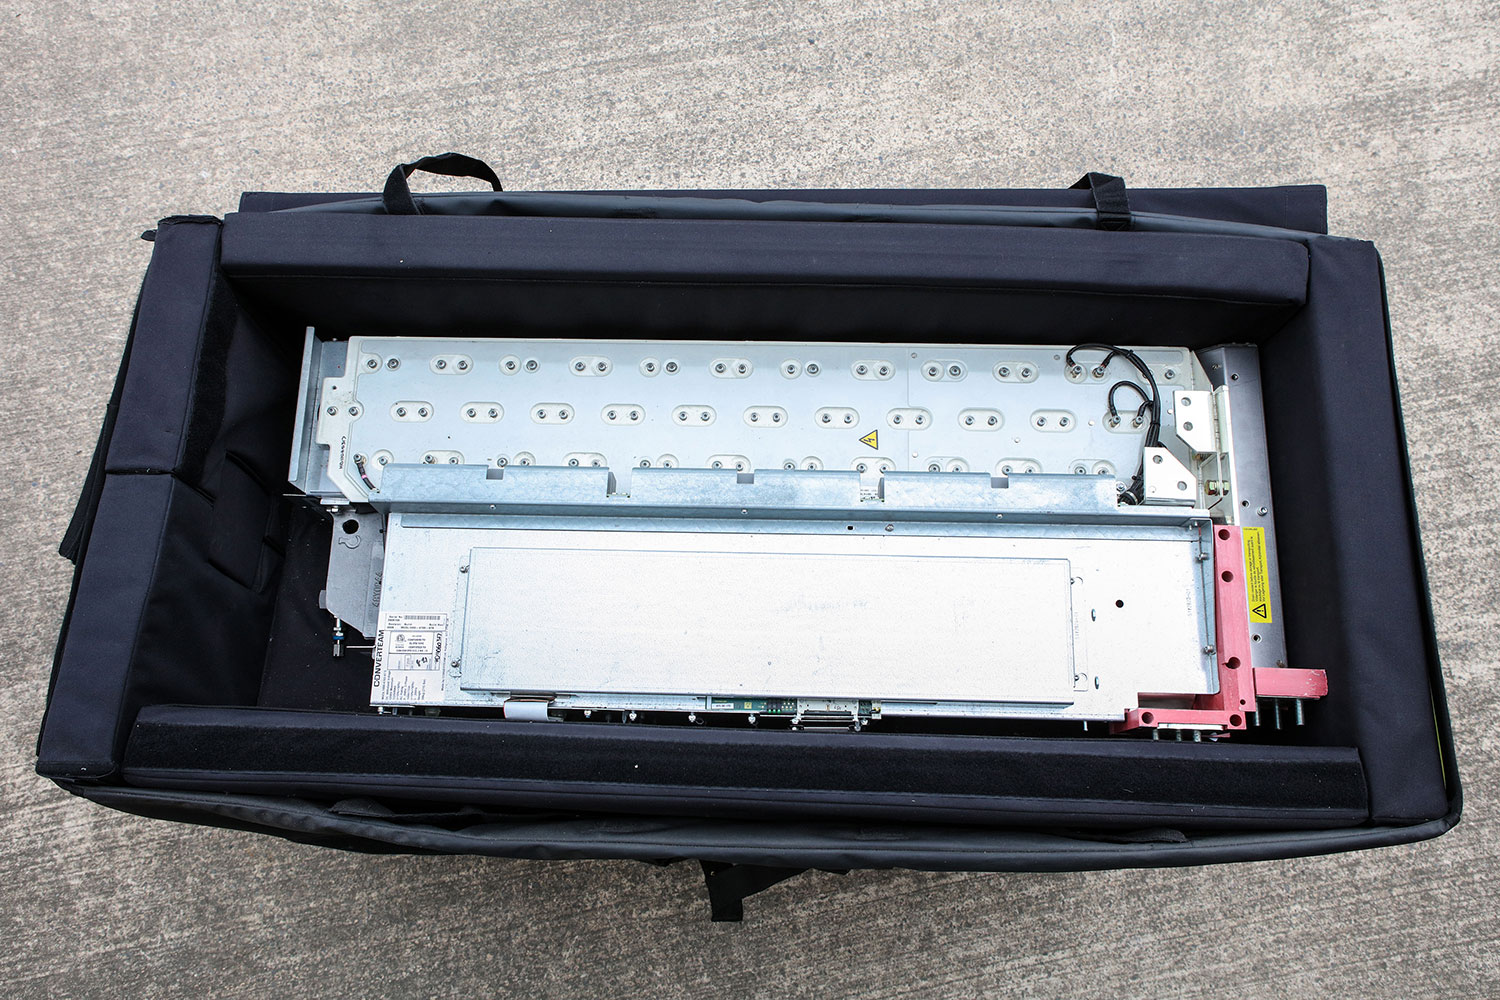 DeltaSAFE protective bag for Delta module transportation and lifting